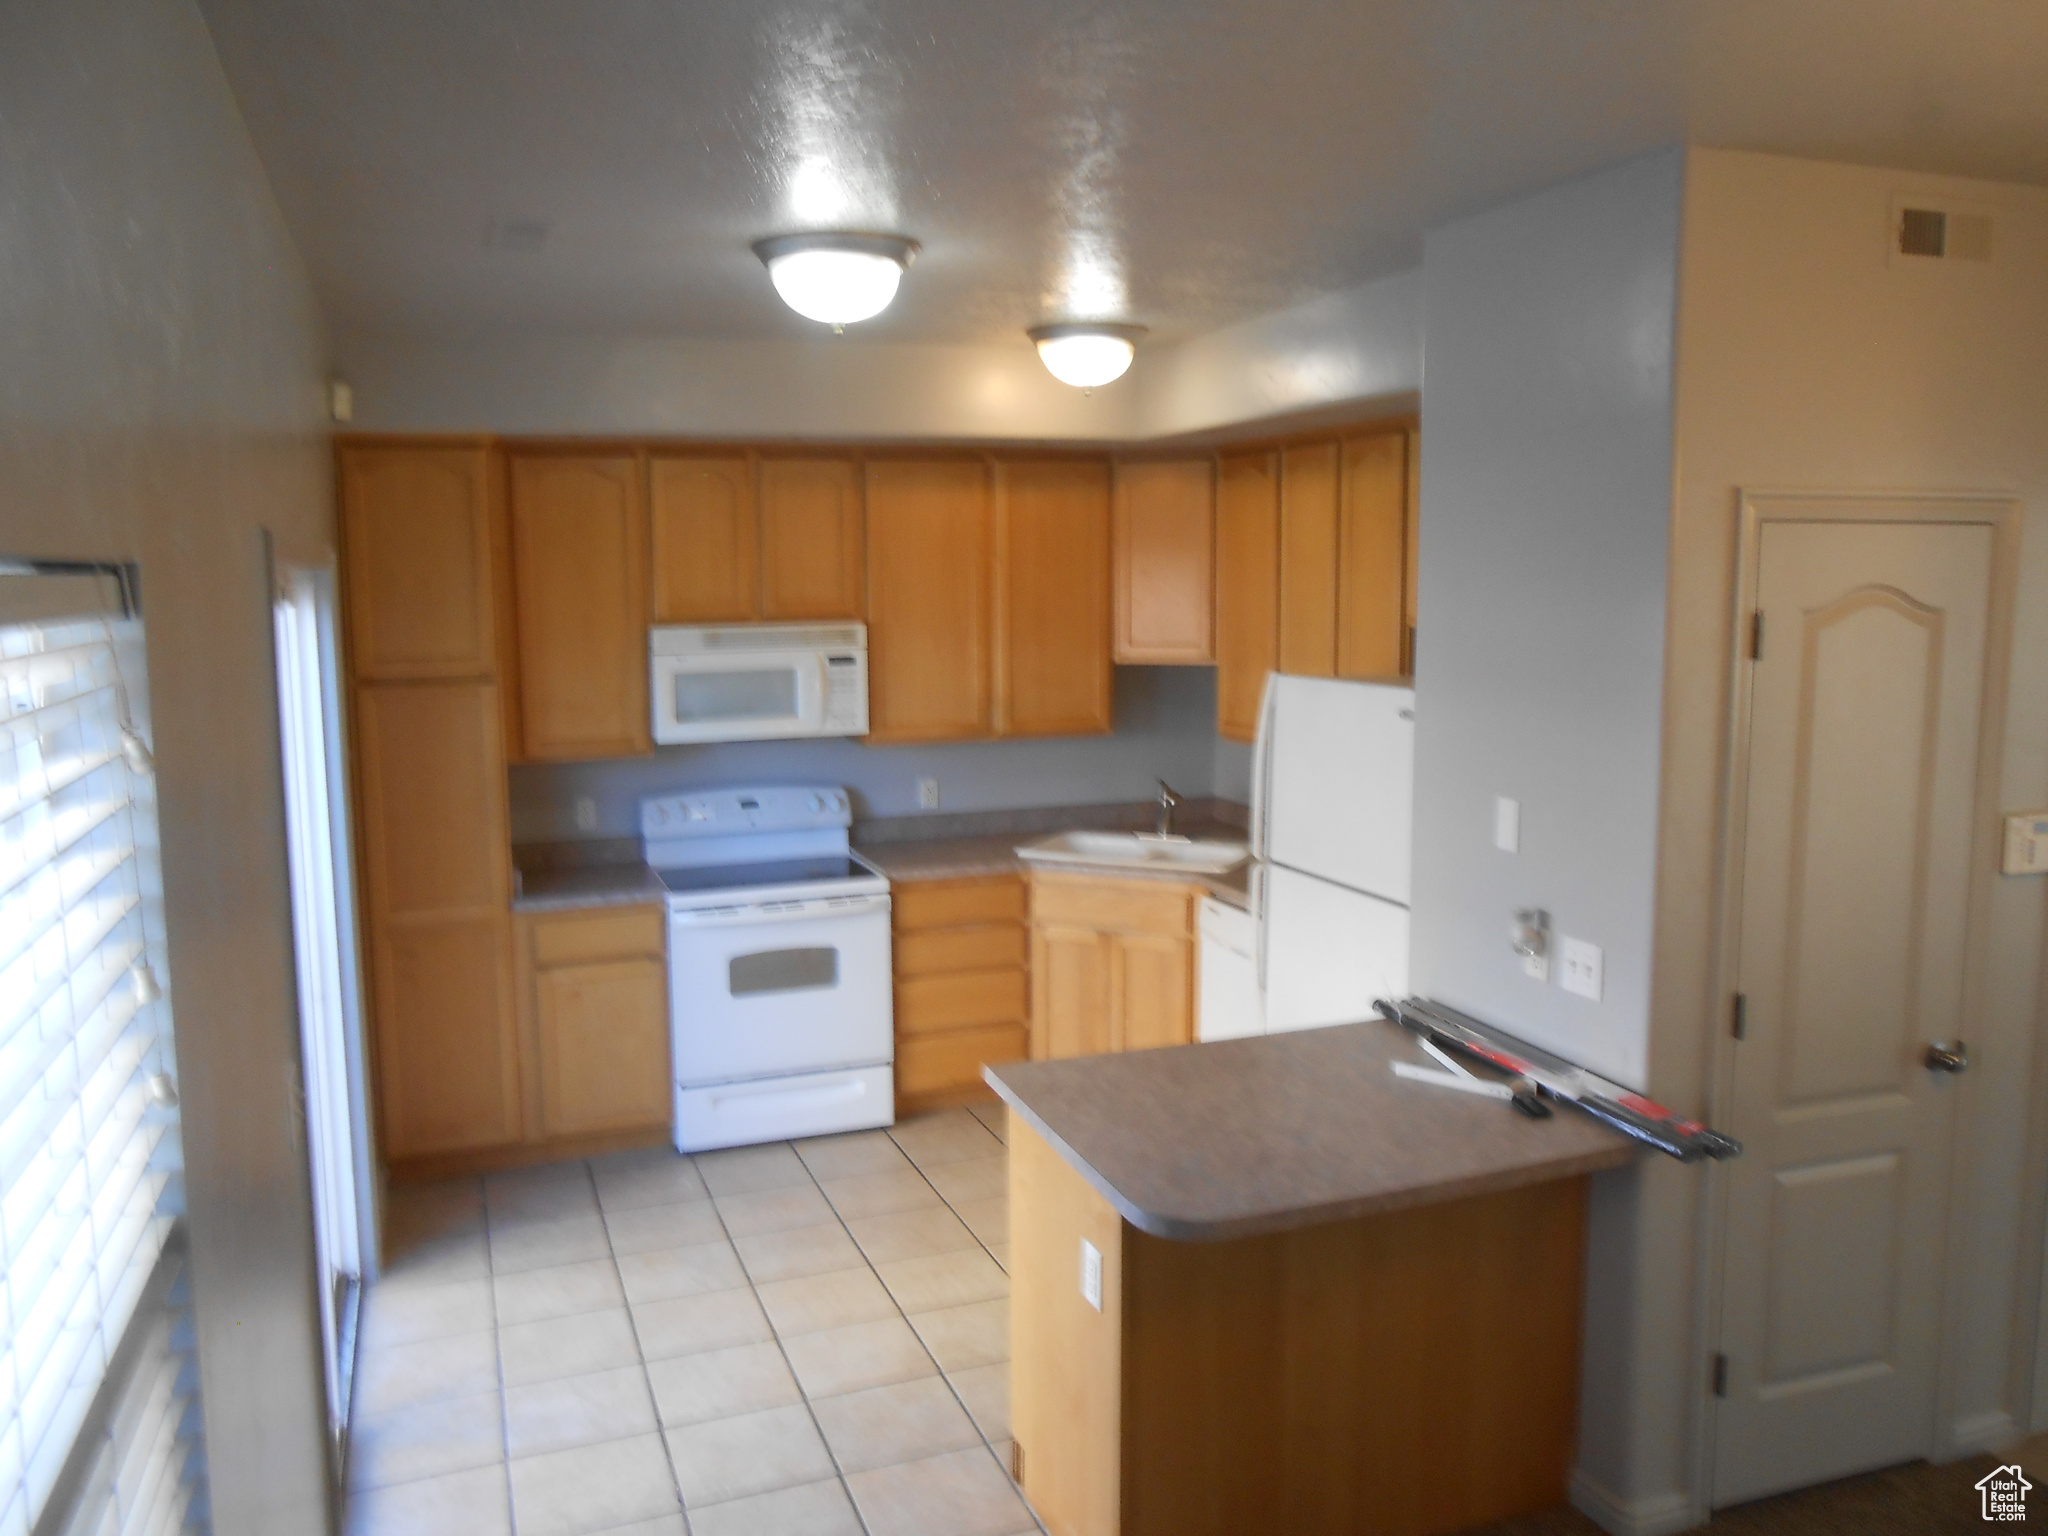 Kitchen with sink, white appliances, light tile flooring, and kitchen peninsula